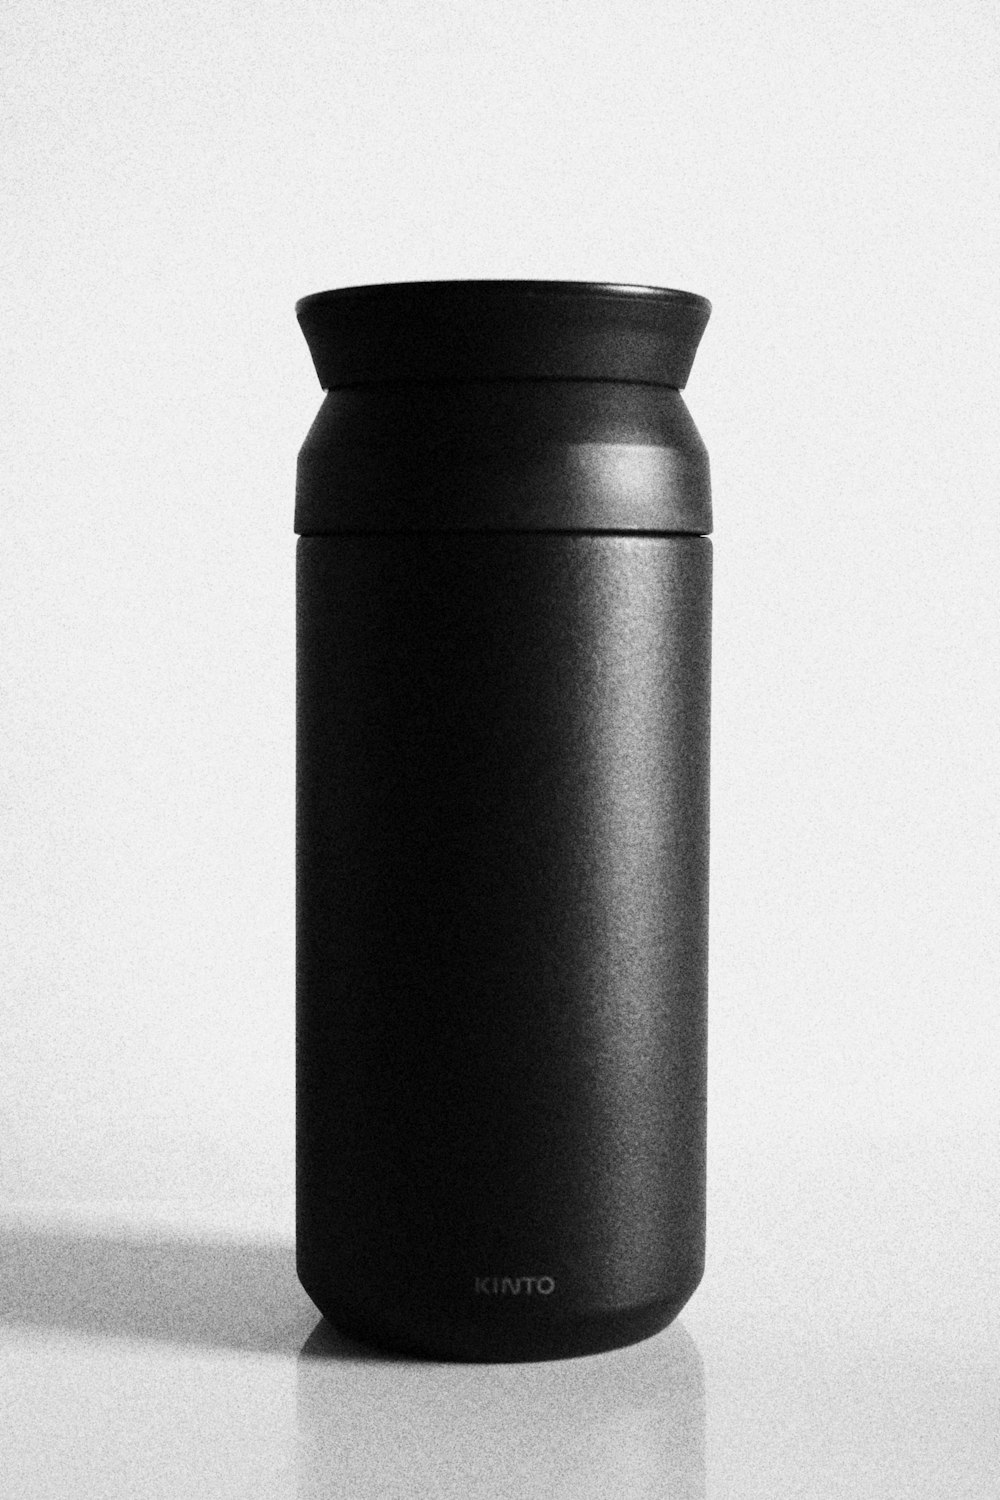 black steel tube on white surface